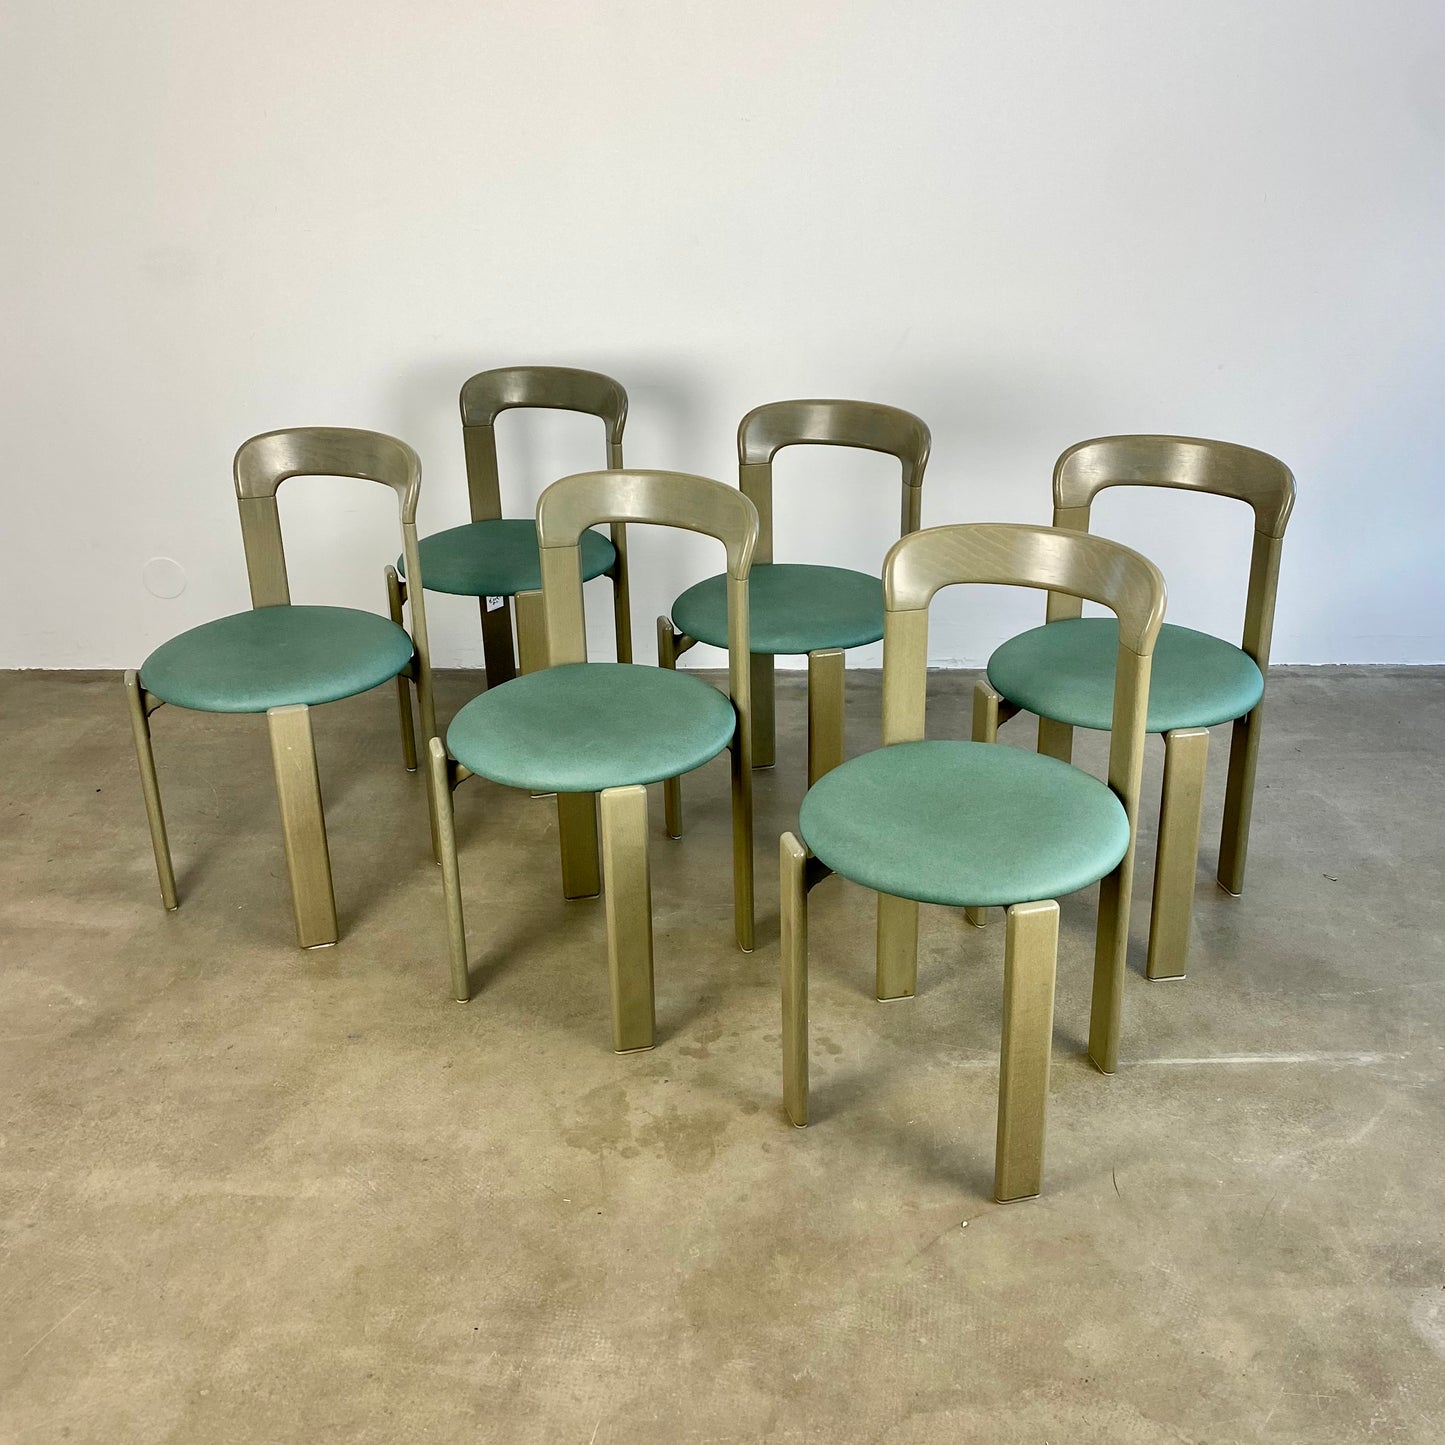 bruno-rey-chairs-by-kush-co